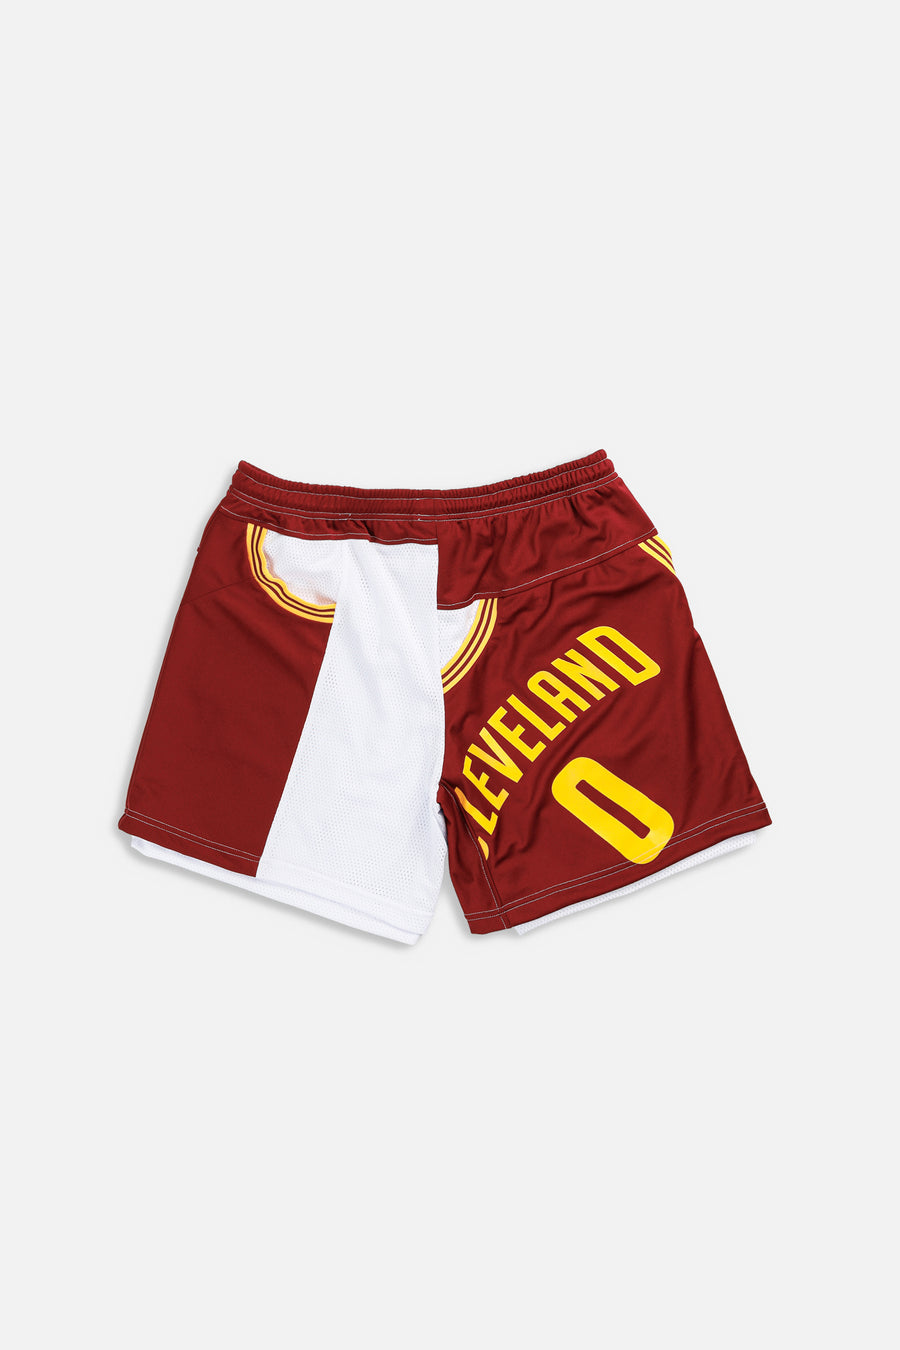 Unisex Rework Cleveland Cavaliers NBA Jersey Shorts - XXL